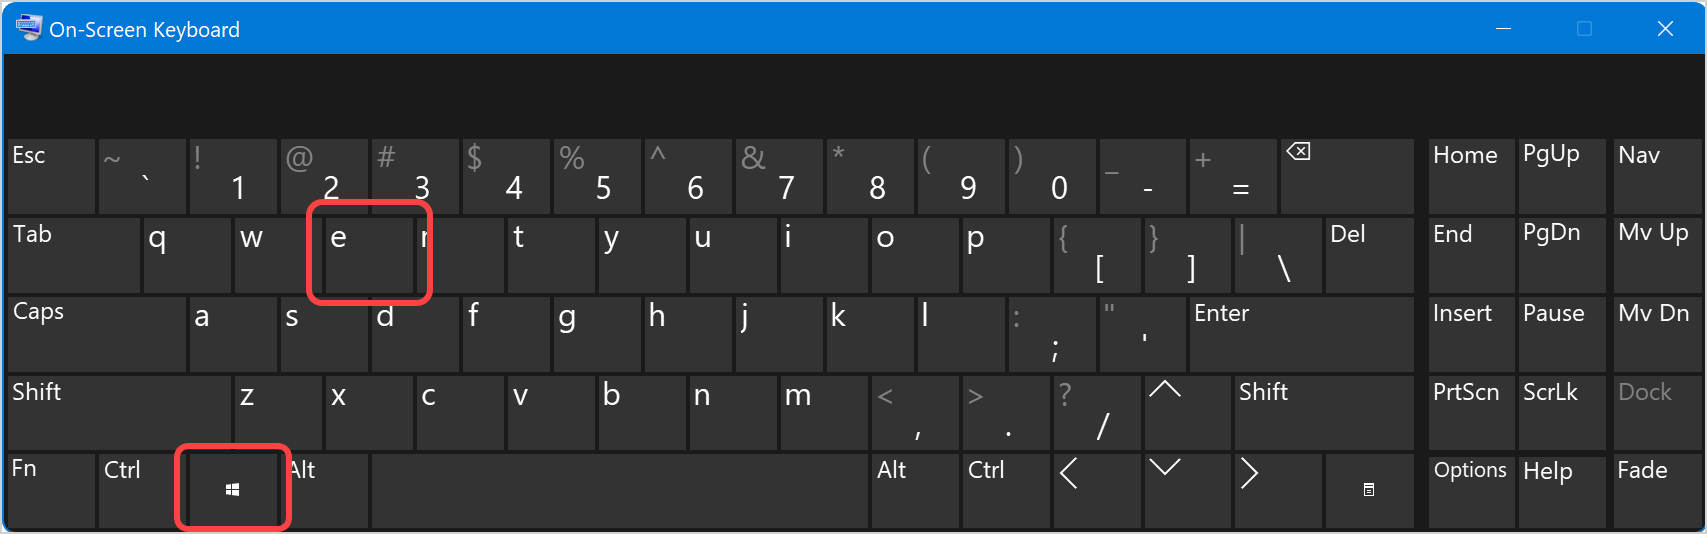 Keyboard Shortcut to Open File Explorer